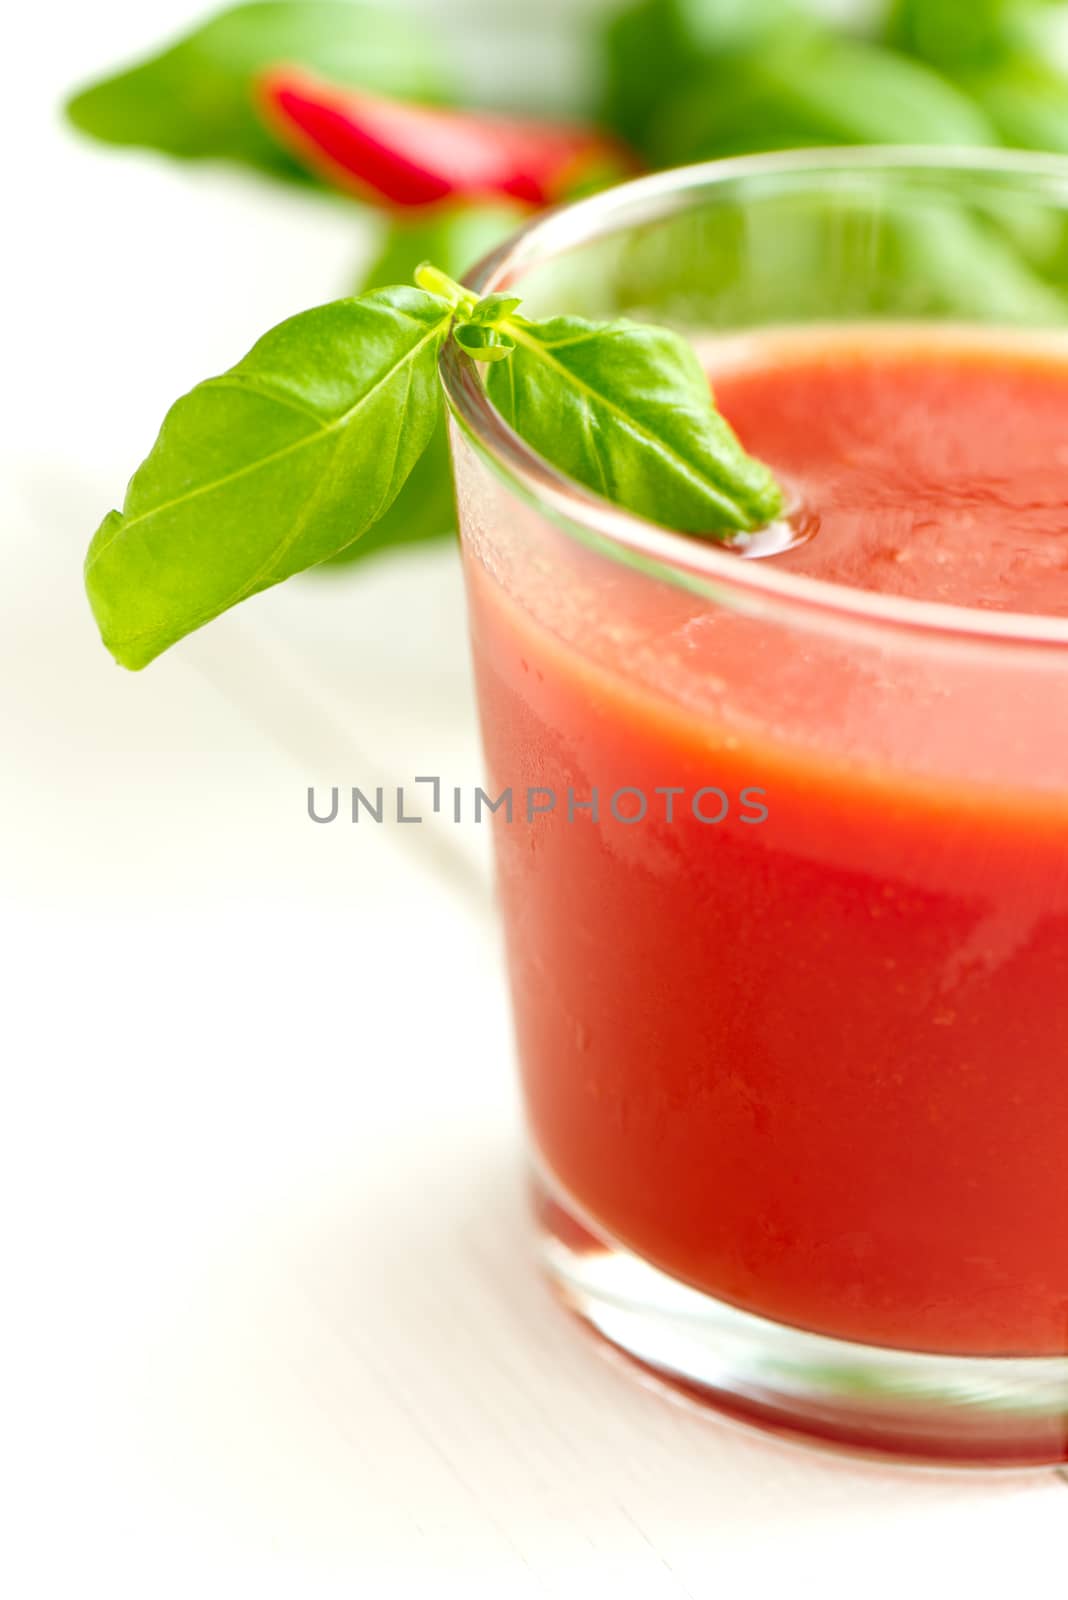 Tomato juice on white wooden table background by Nanisimova